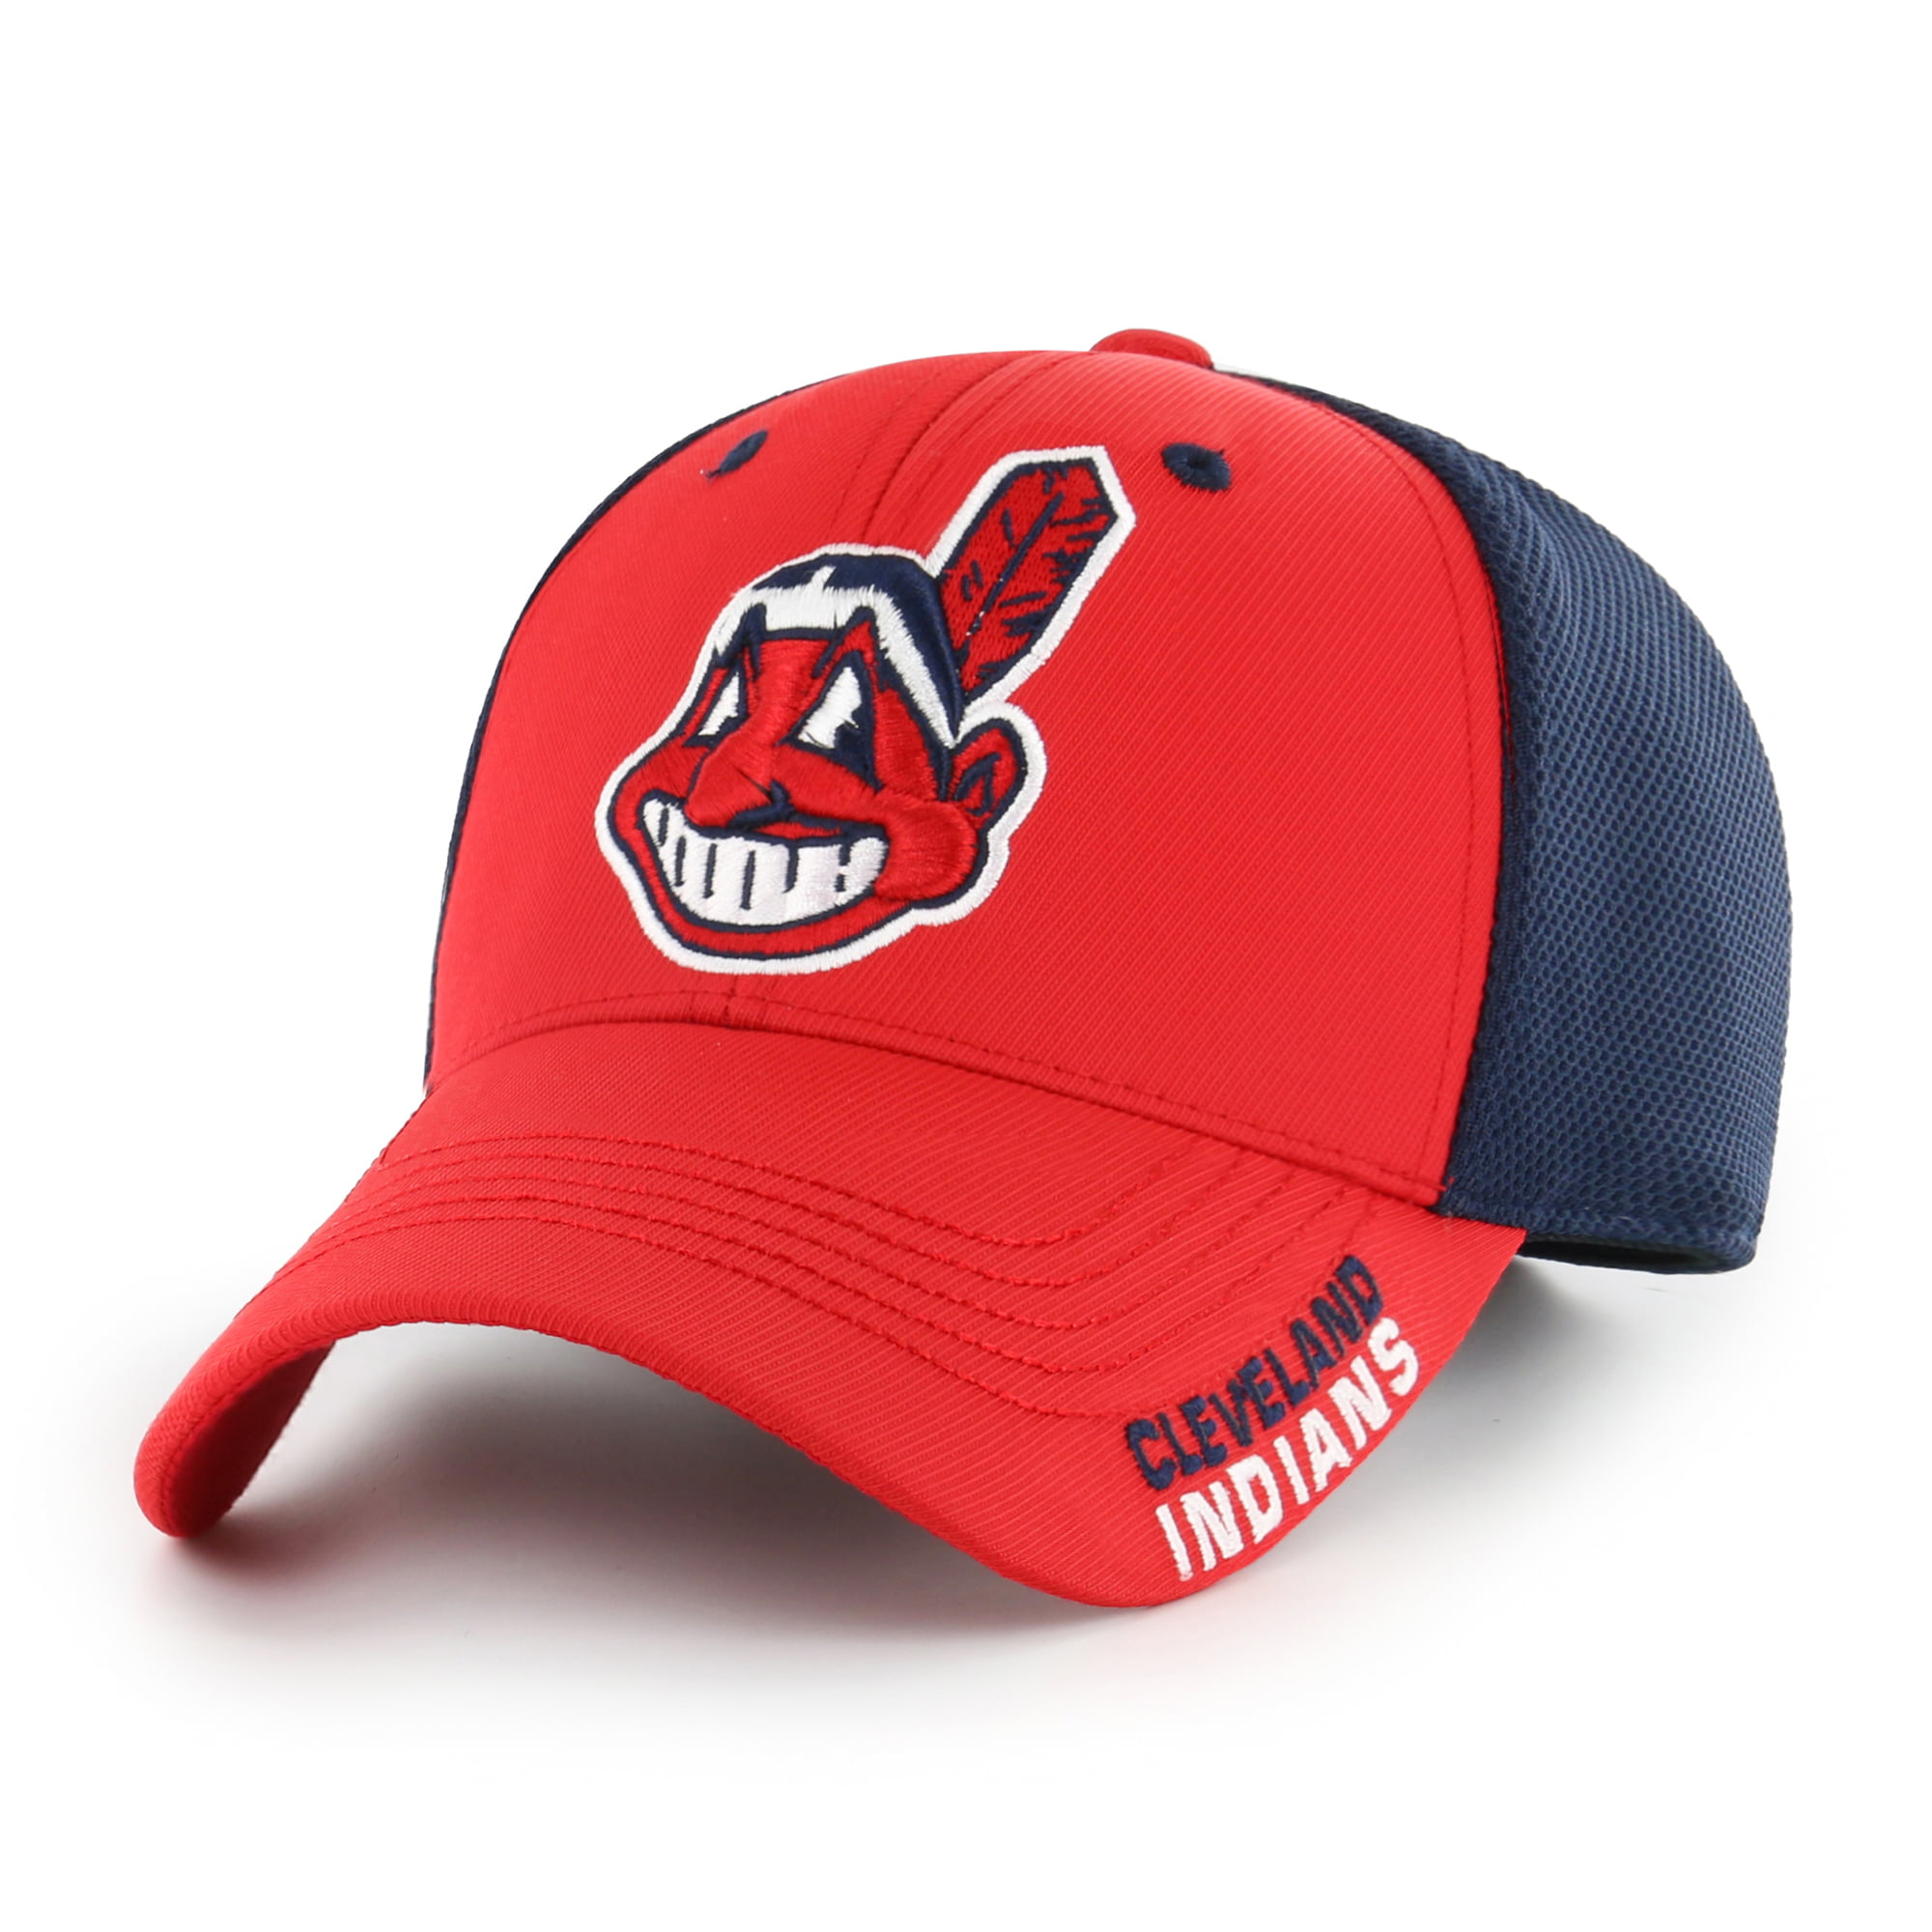 MLB Cleveland Indians Completion Adjustable Cap/Hat by Fan Favorite